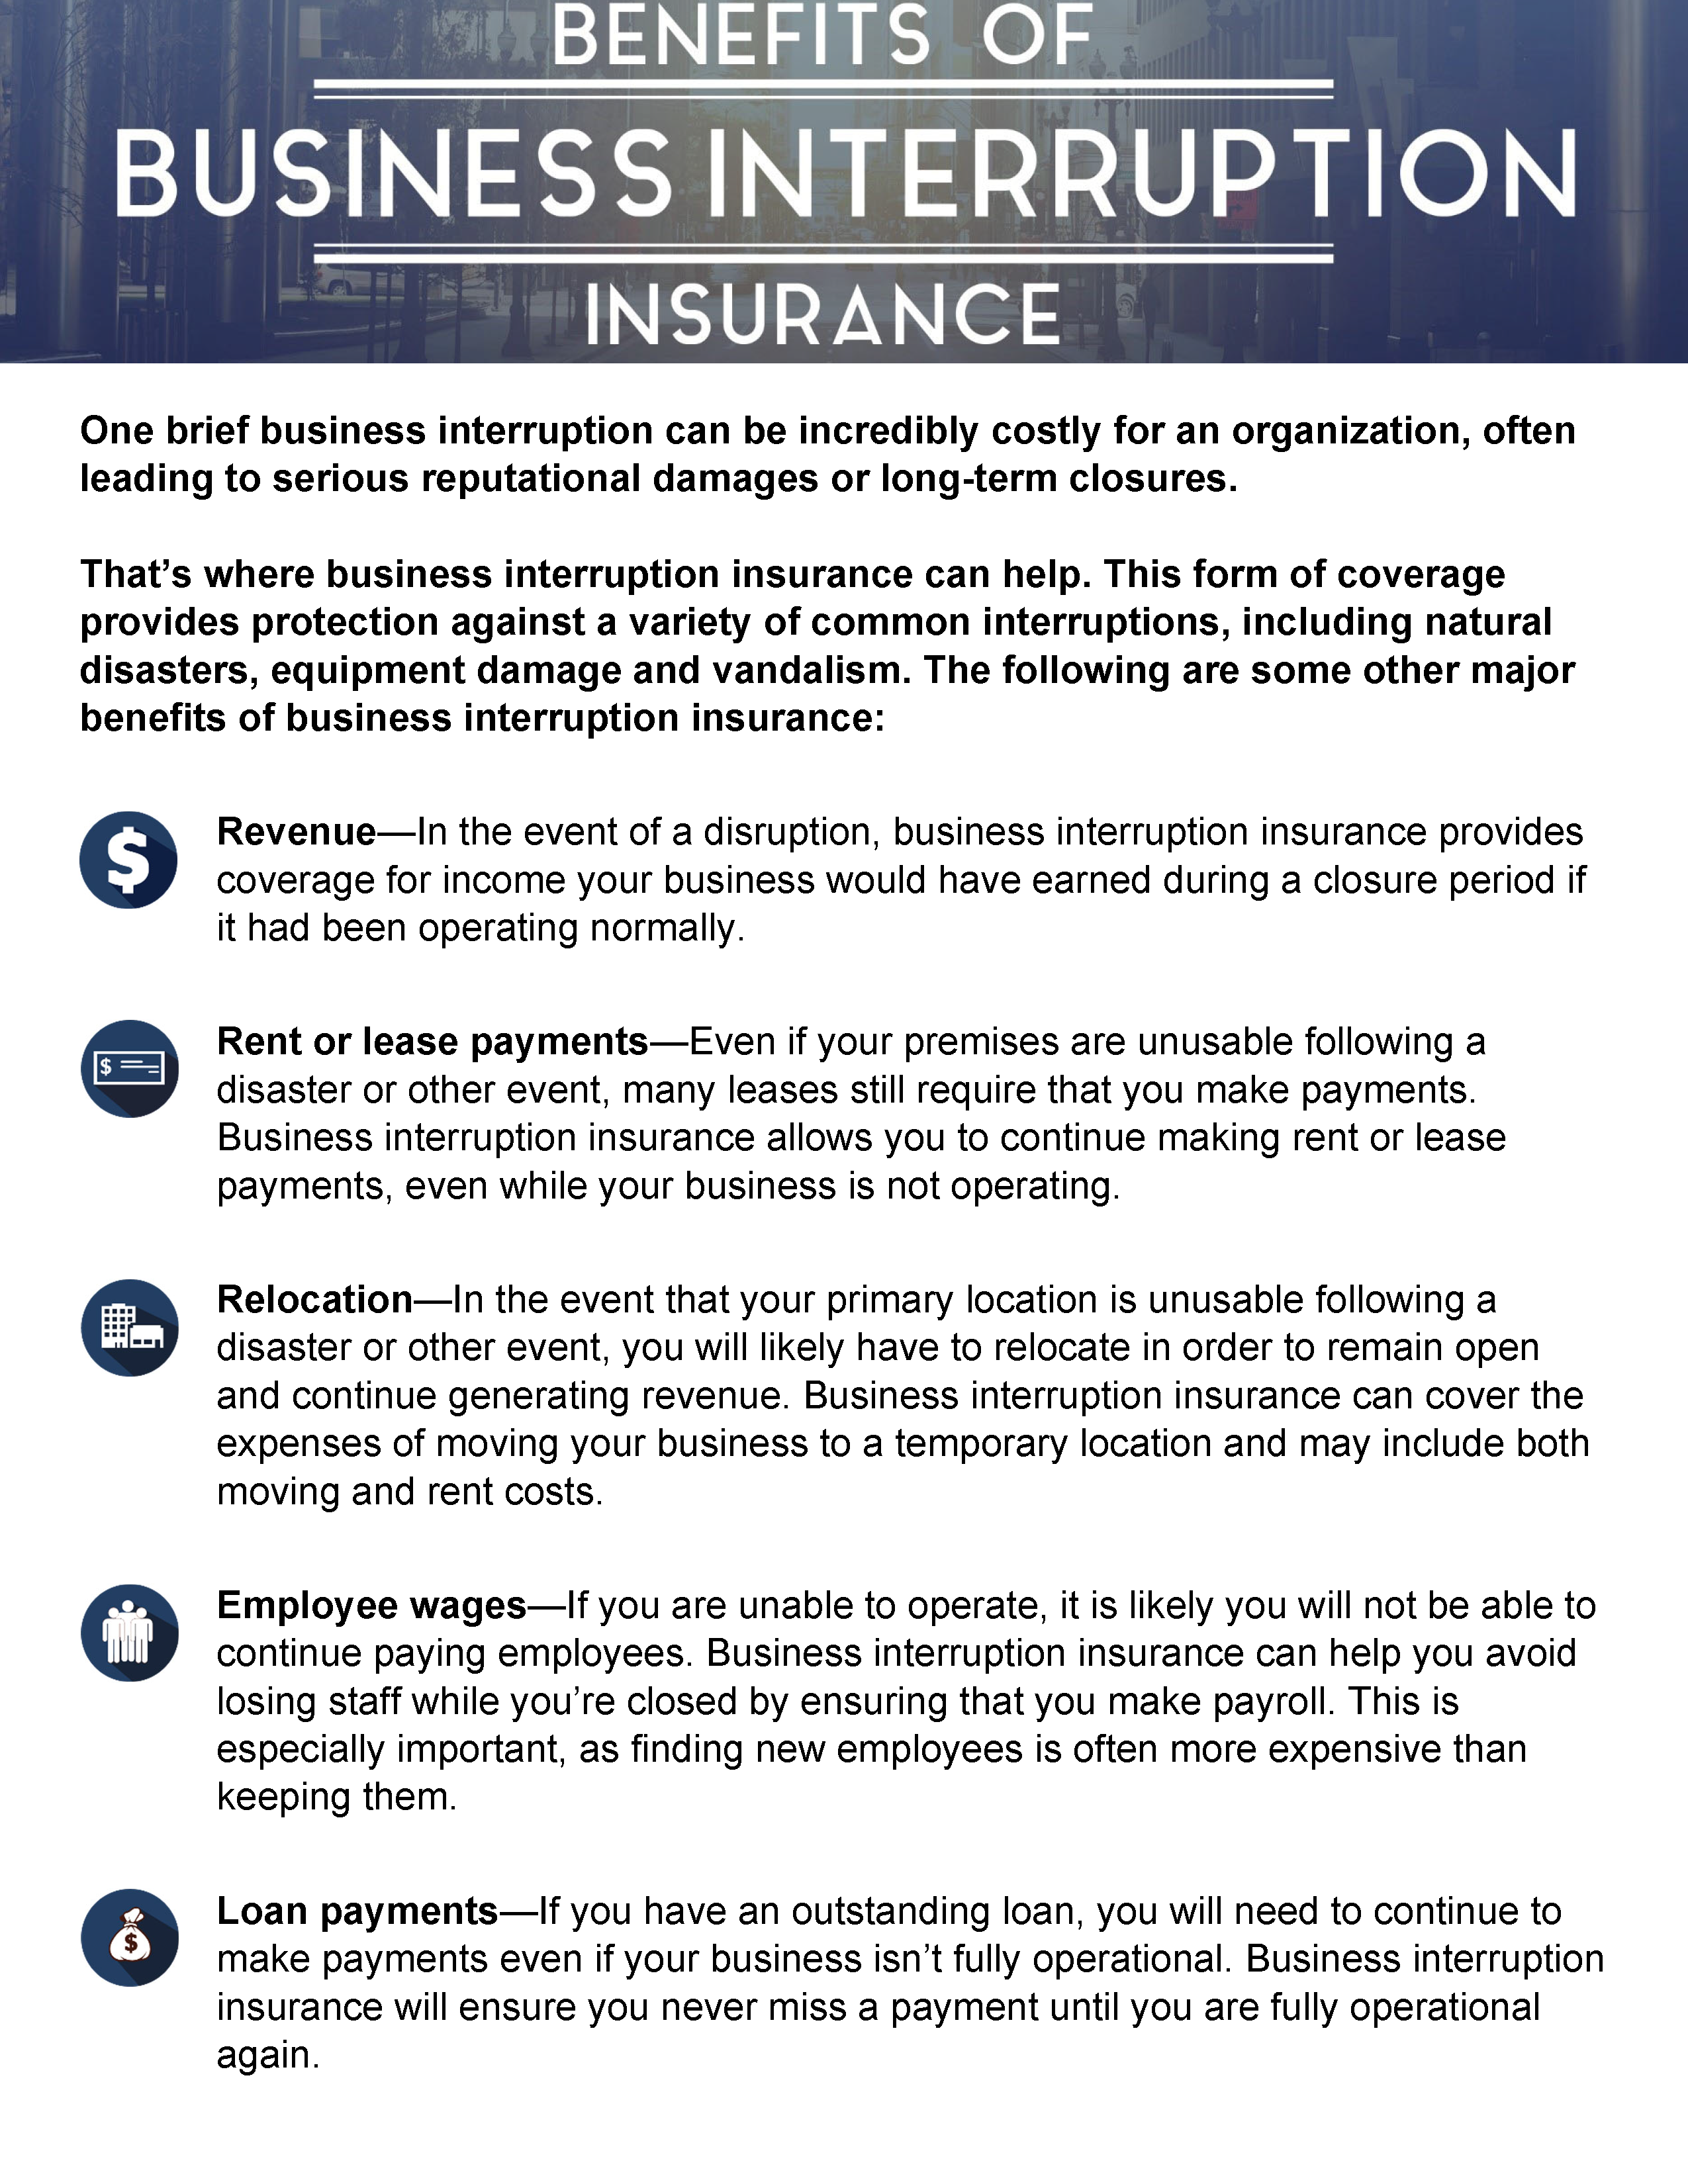 Benefits of Business Interruption Insurance